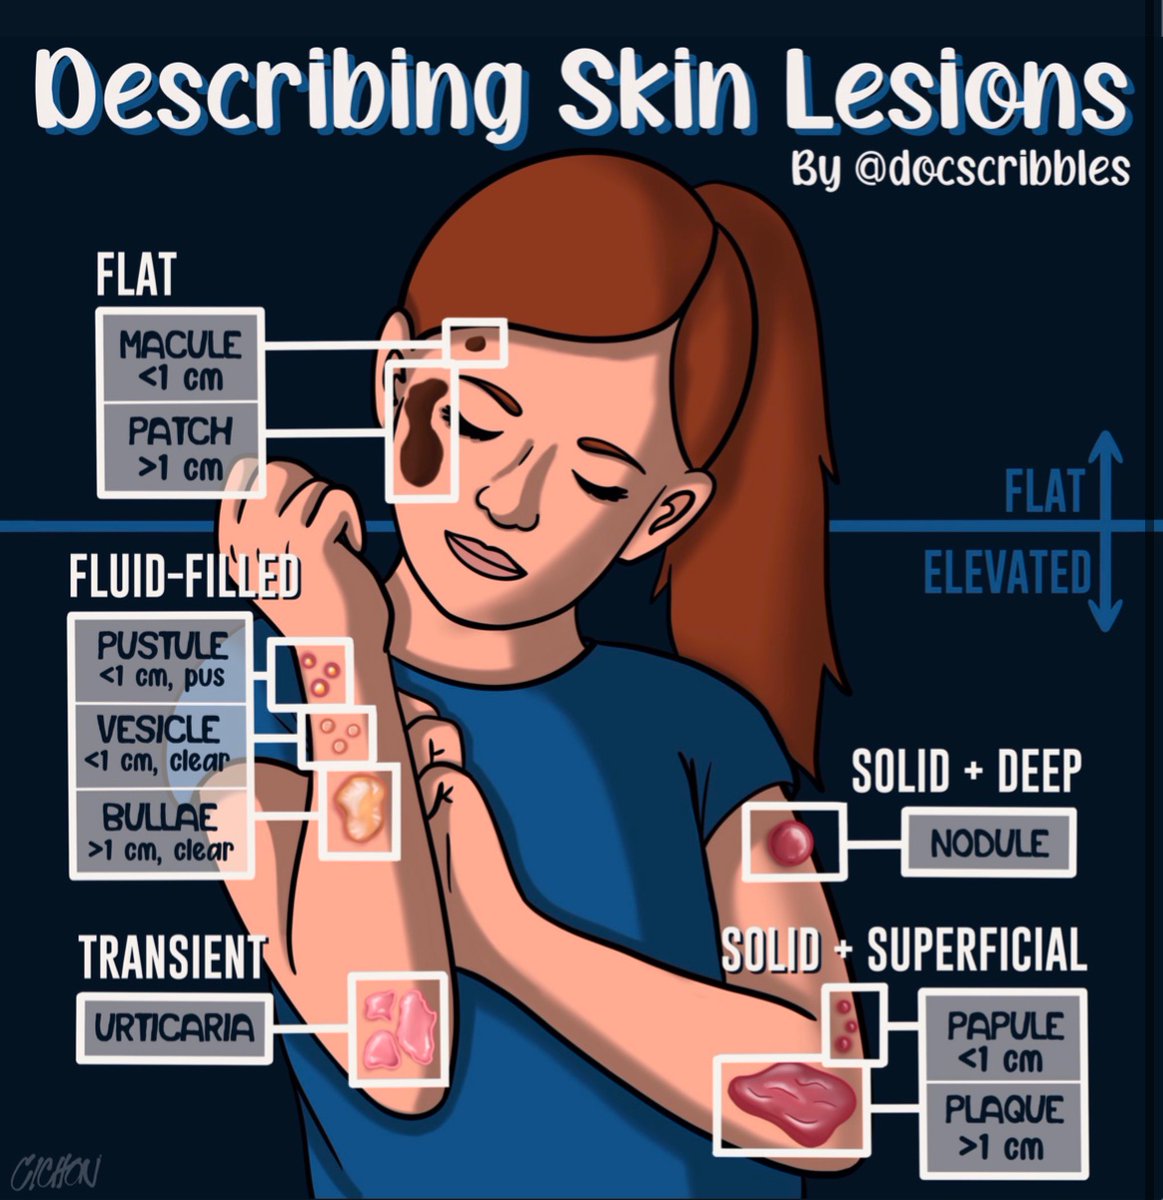 Describing skin lesions credit from 
@DocScribbles

#MedEd #Medtwitter #FOAMed #dermtwitter #Medstudenttwitter